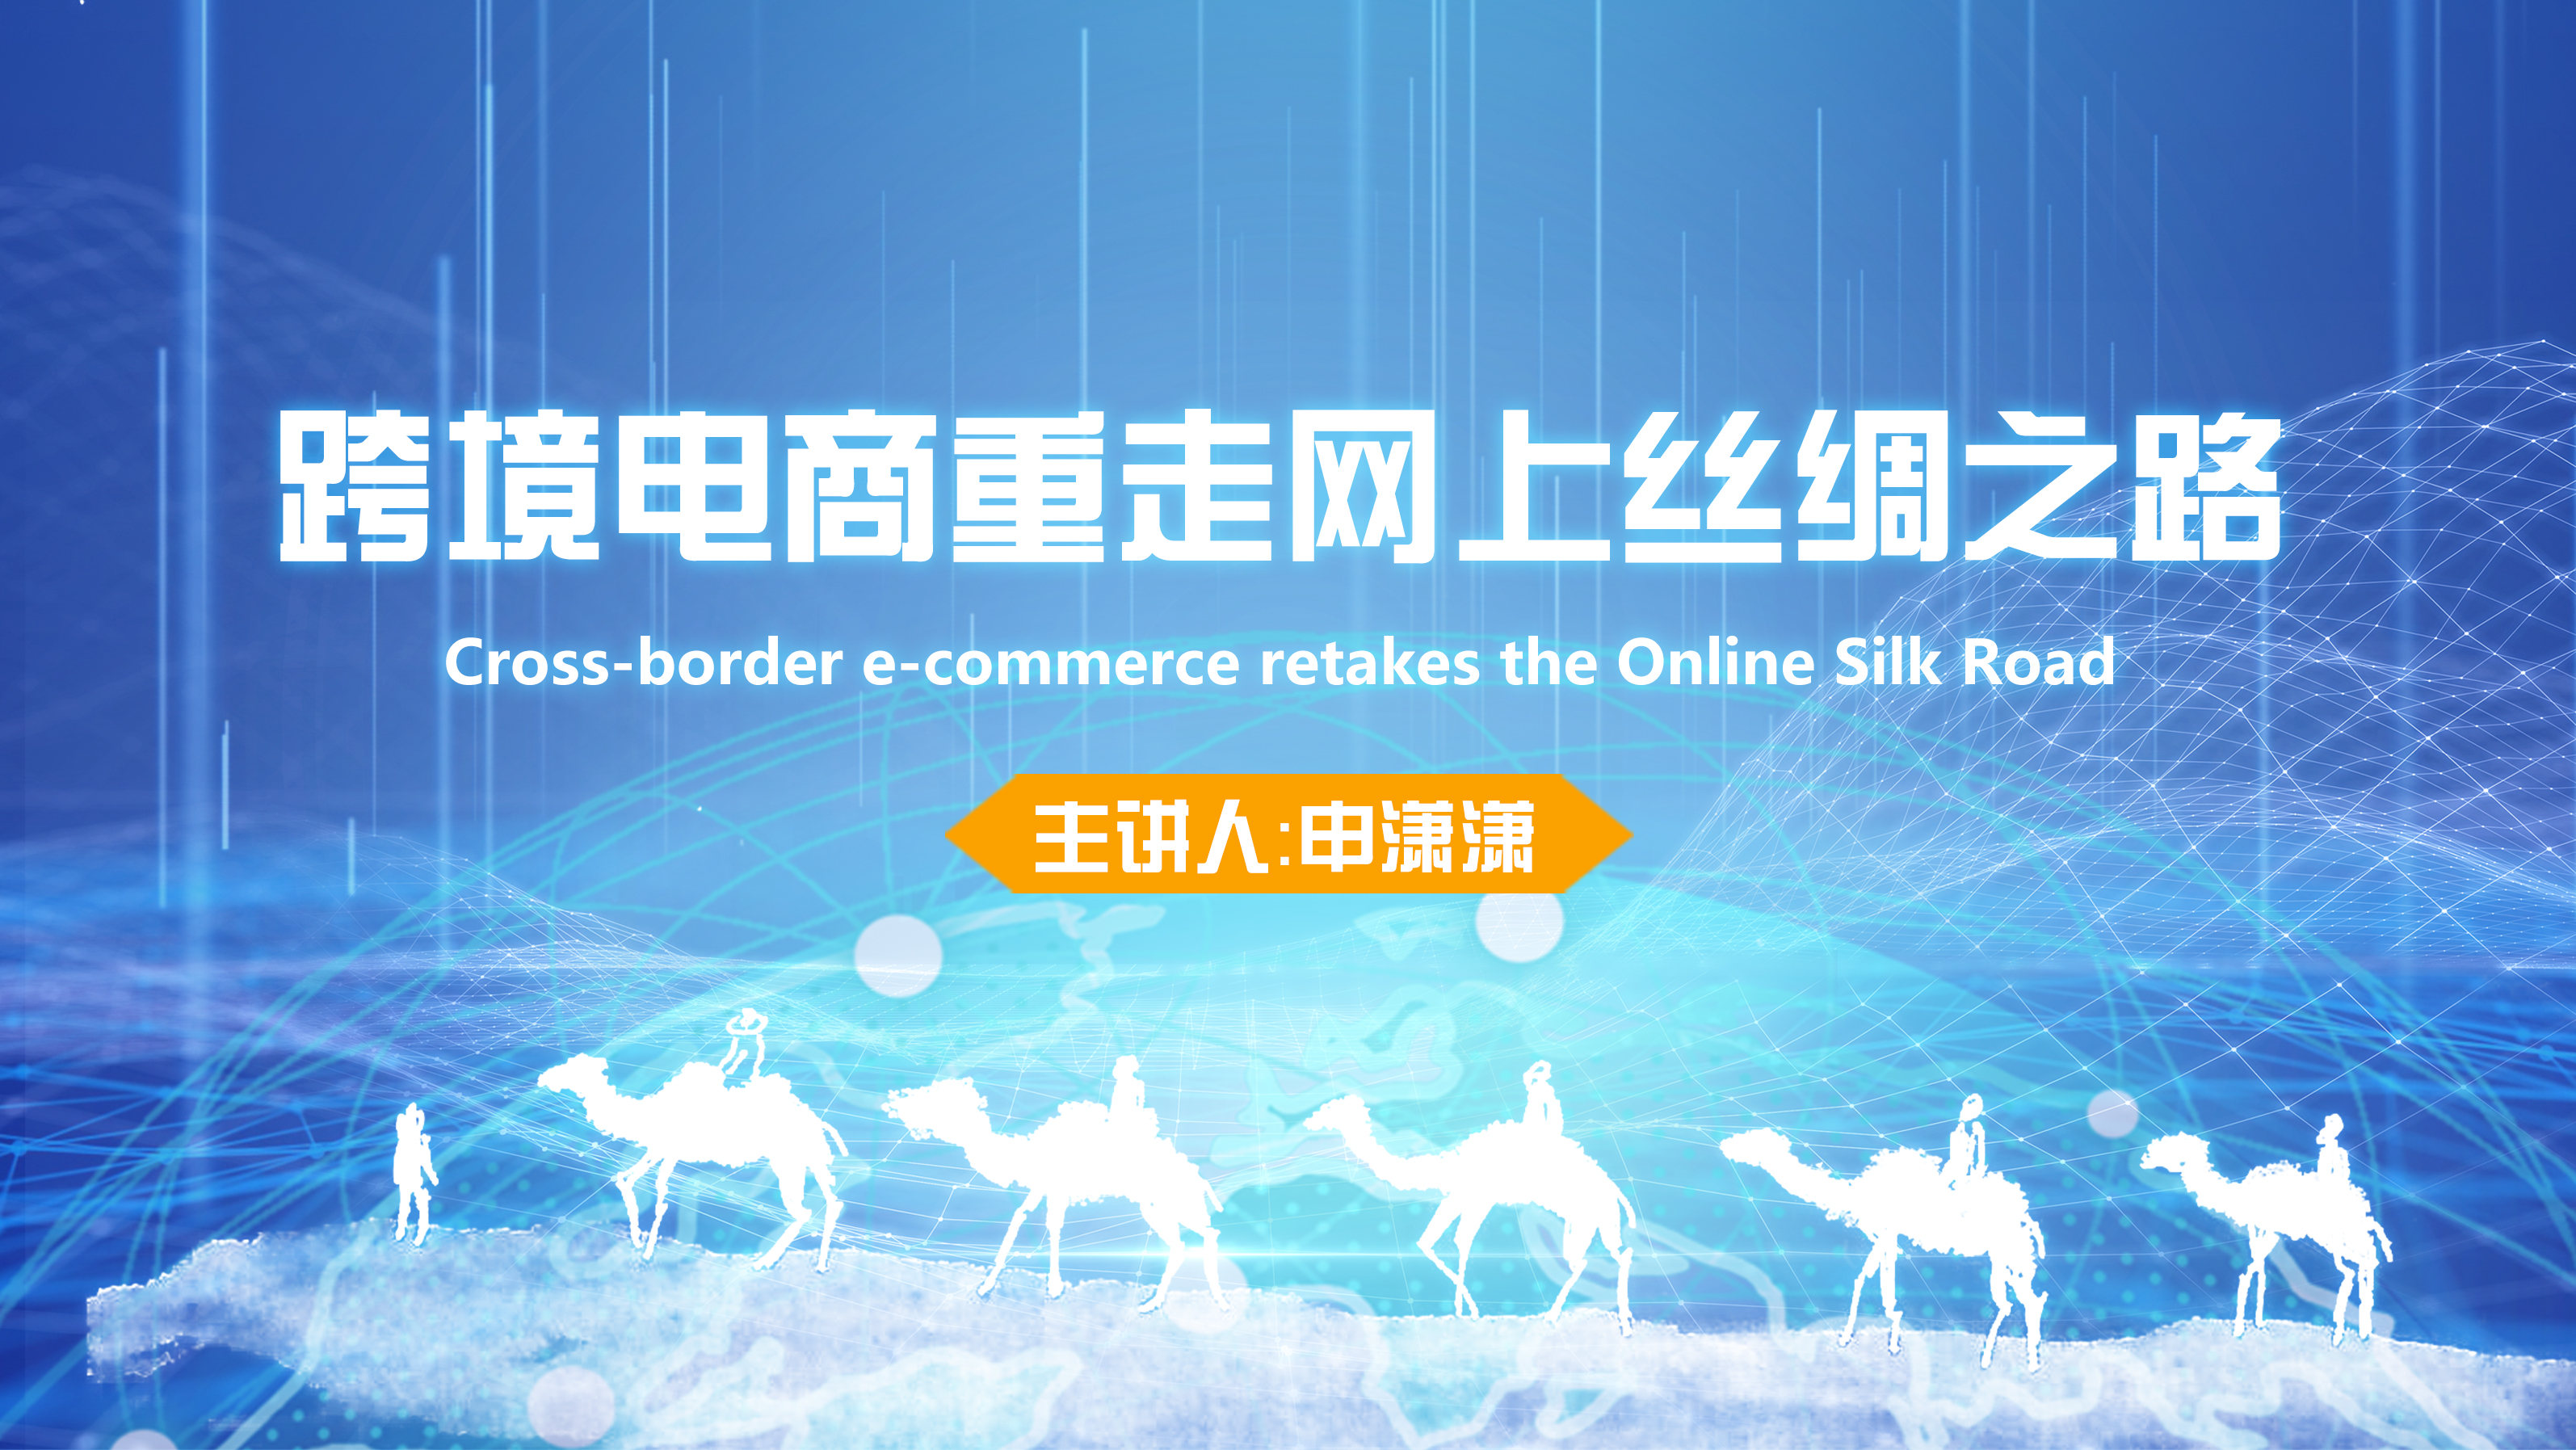 Cross-border e-commerce retakes the Online Silk Road